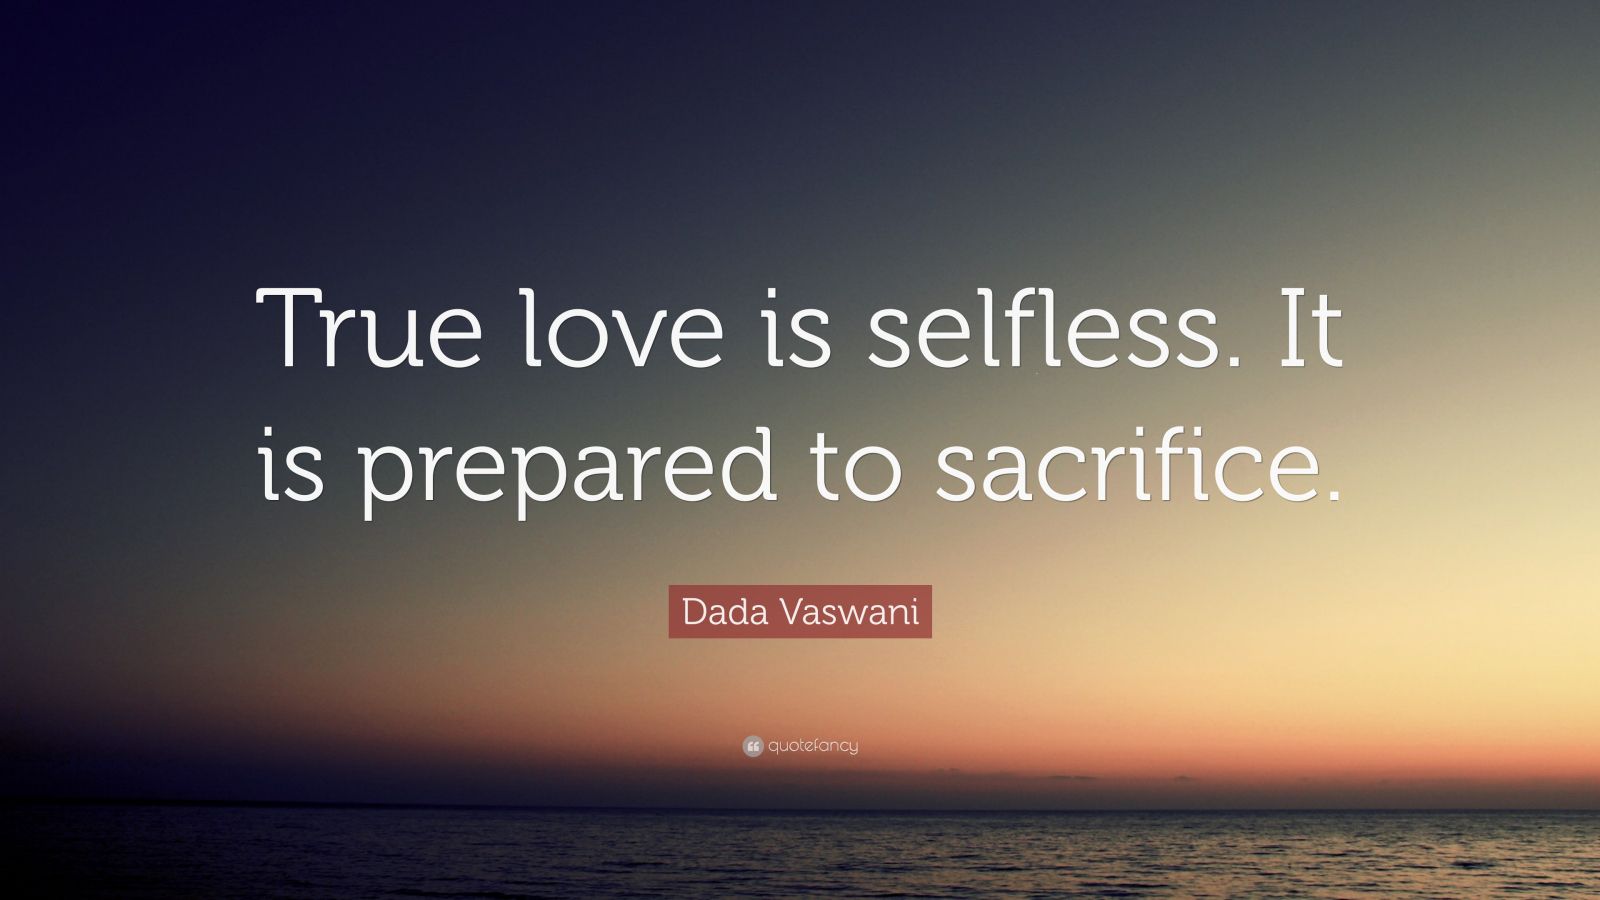 Dada Vaswani Quote: “True love is selfless. It is prepared to sacrifice ...